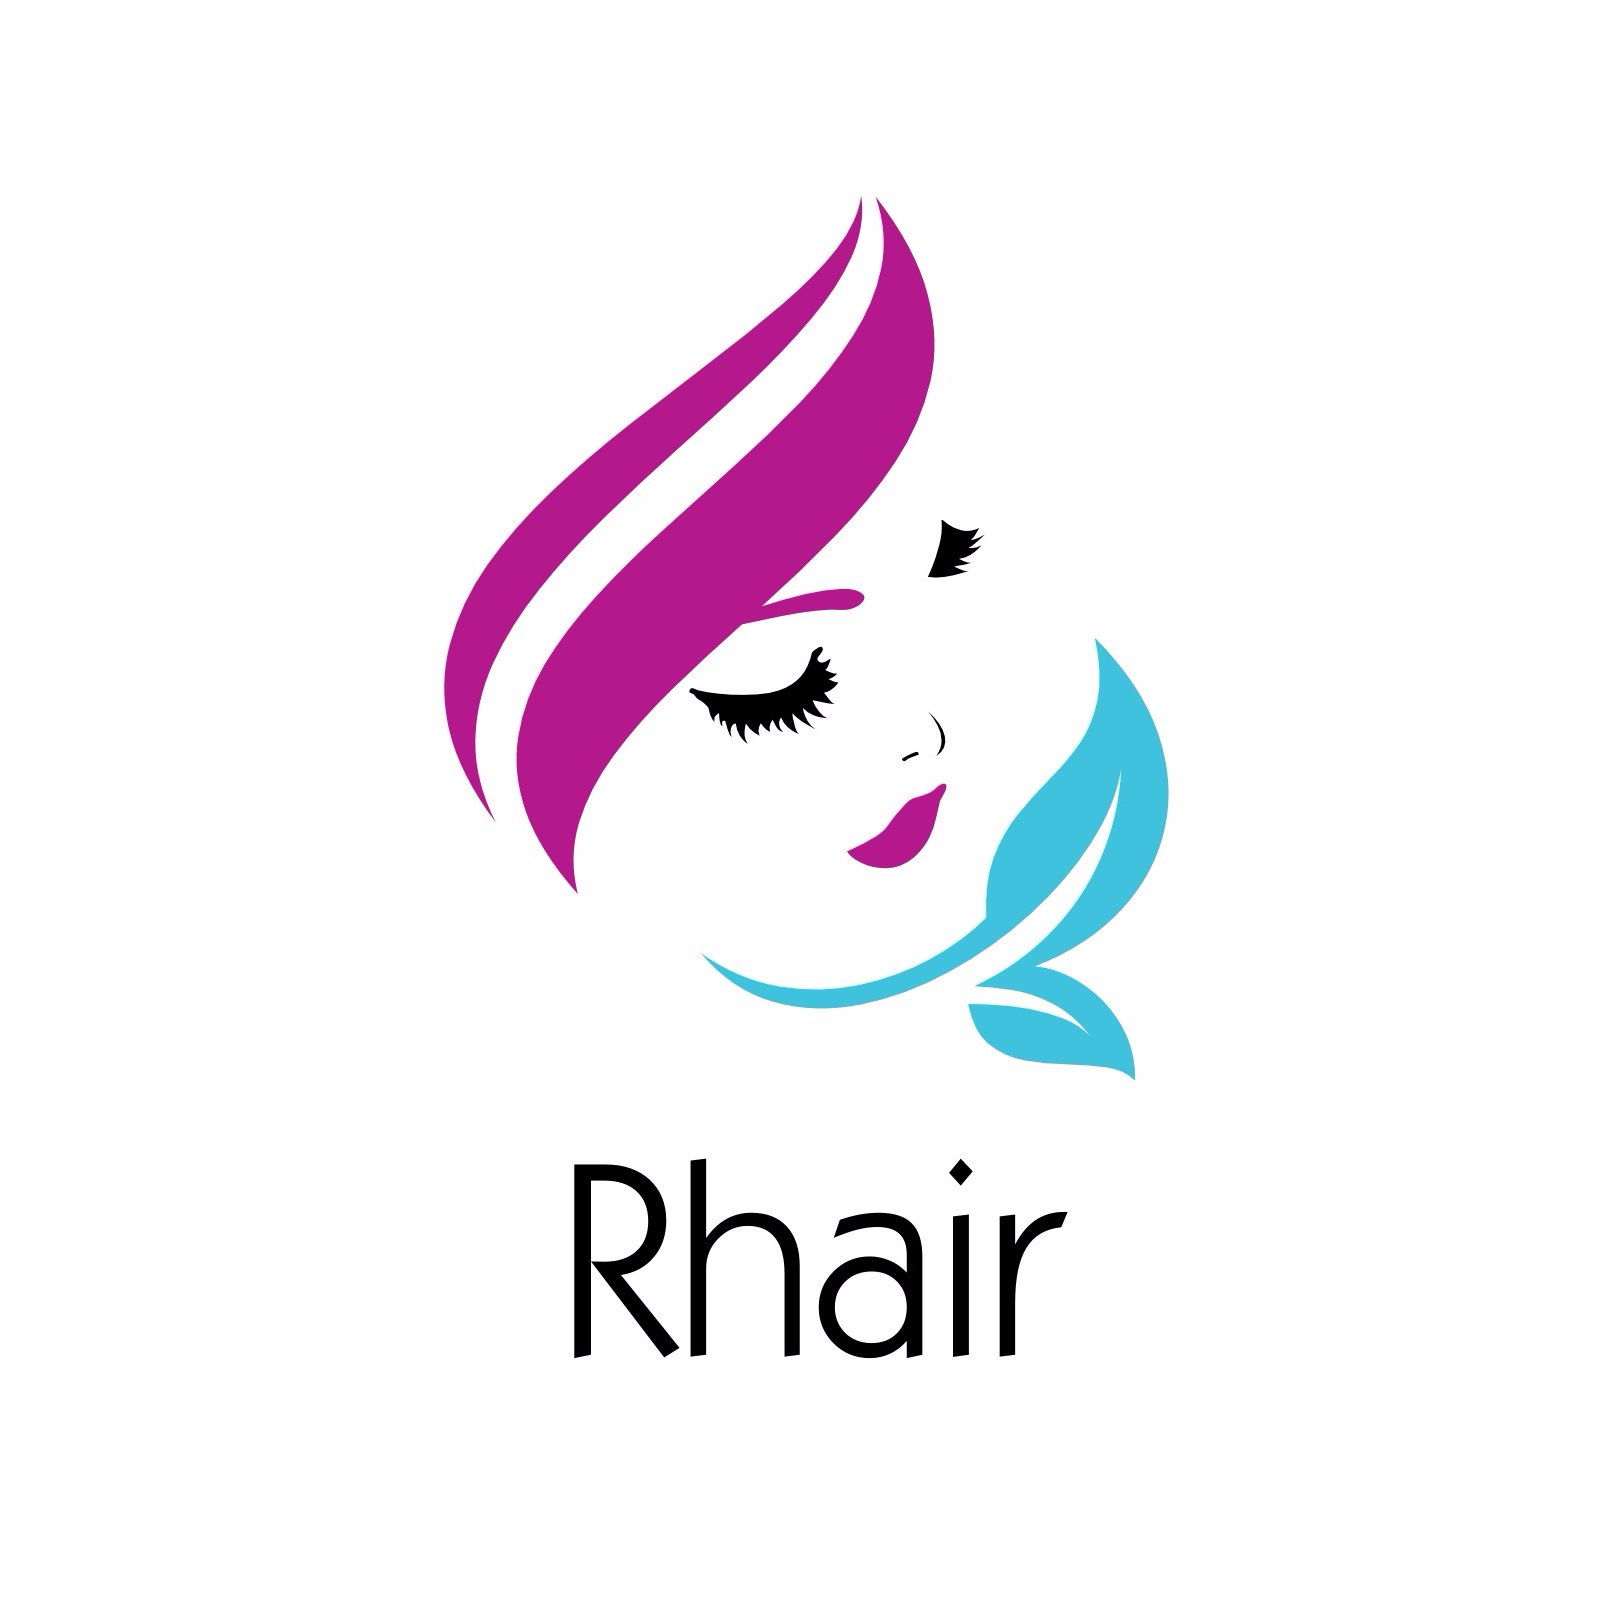 Rhair Products